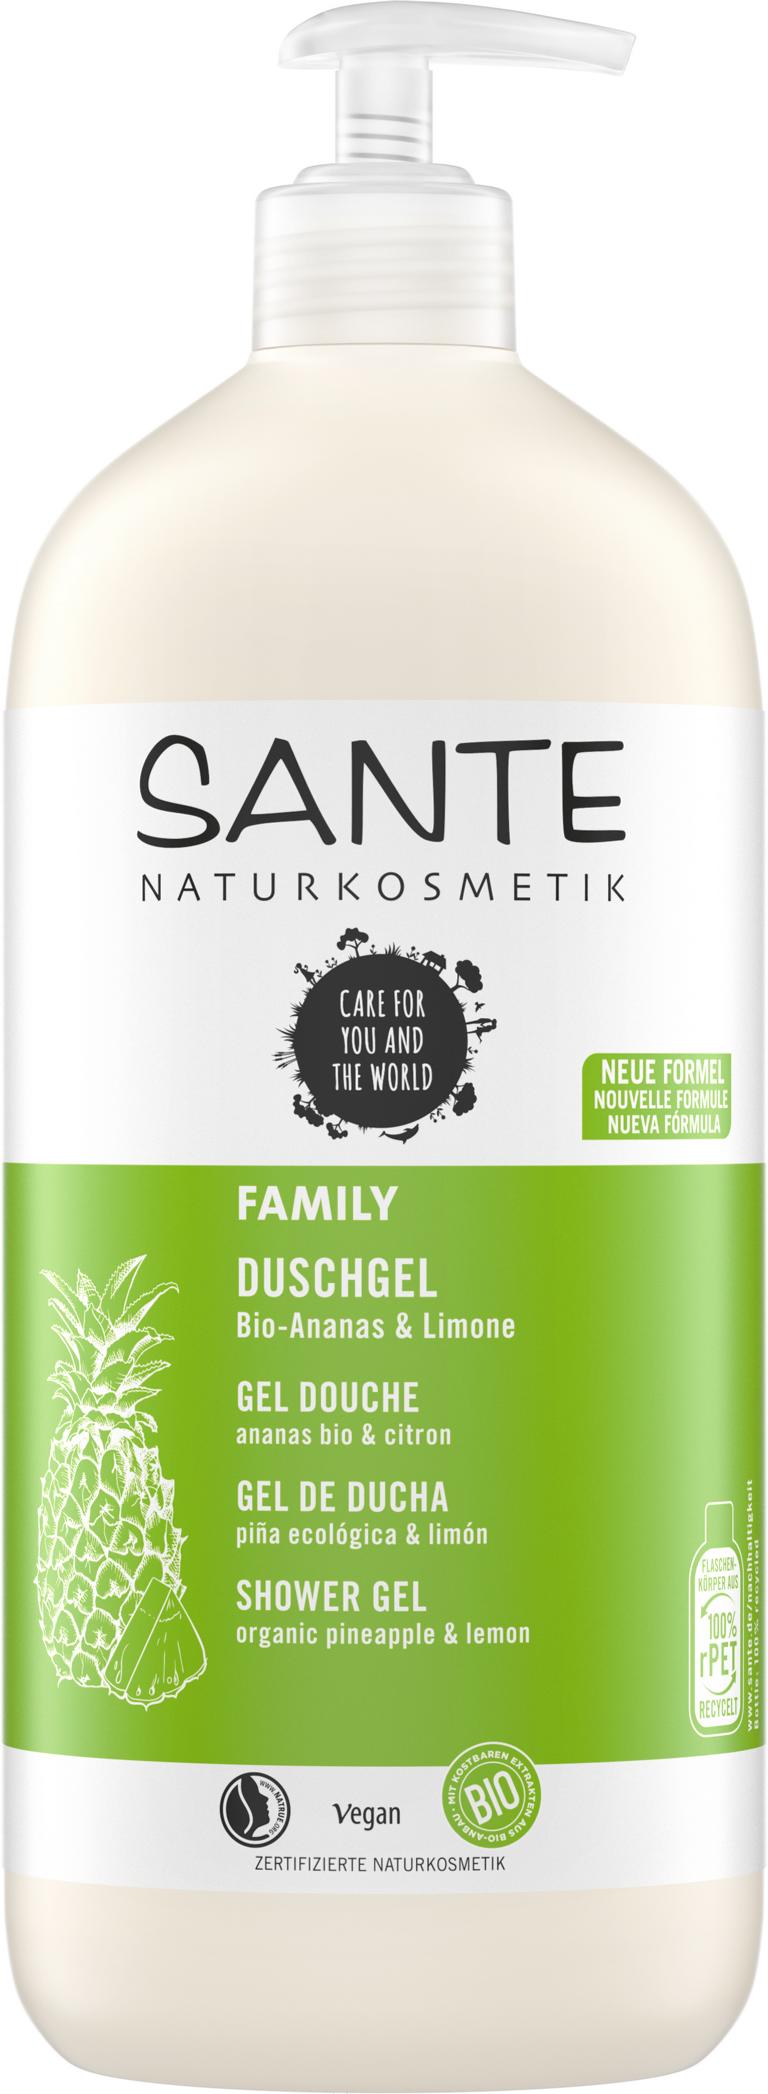 Sante FAMILY Duschgel Bio-Ananas & Limone 950ml